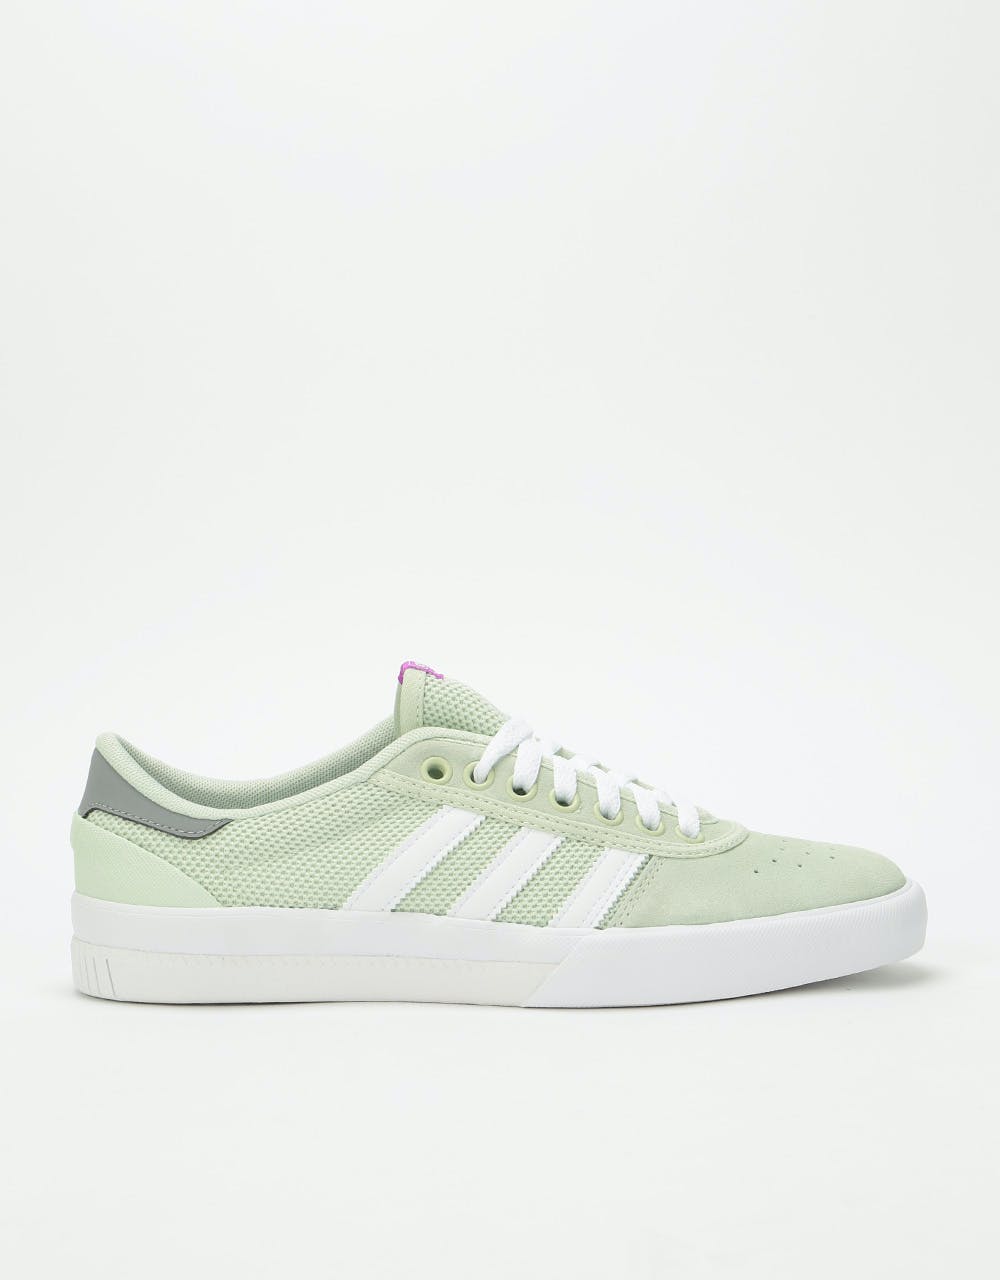 Adidas Lucas Premiere Skate Shoes - Linen Green/Cloud White/Grey Three